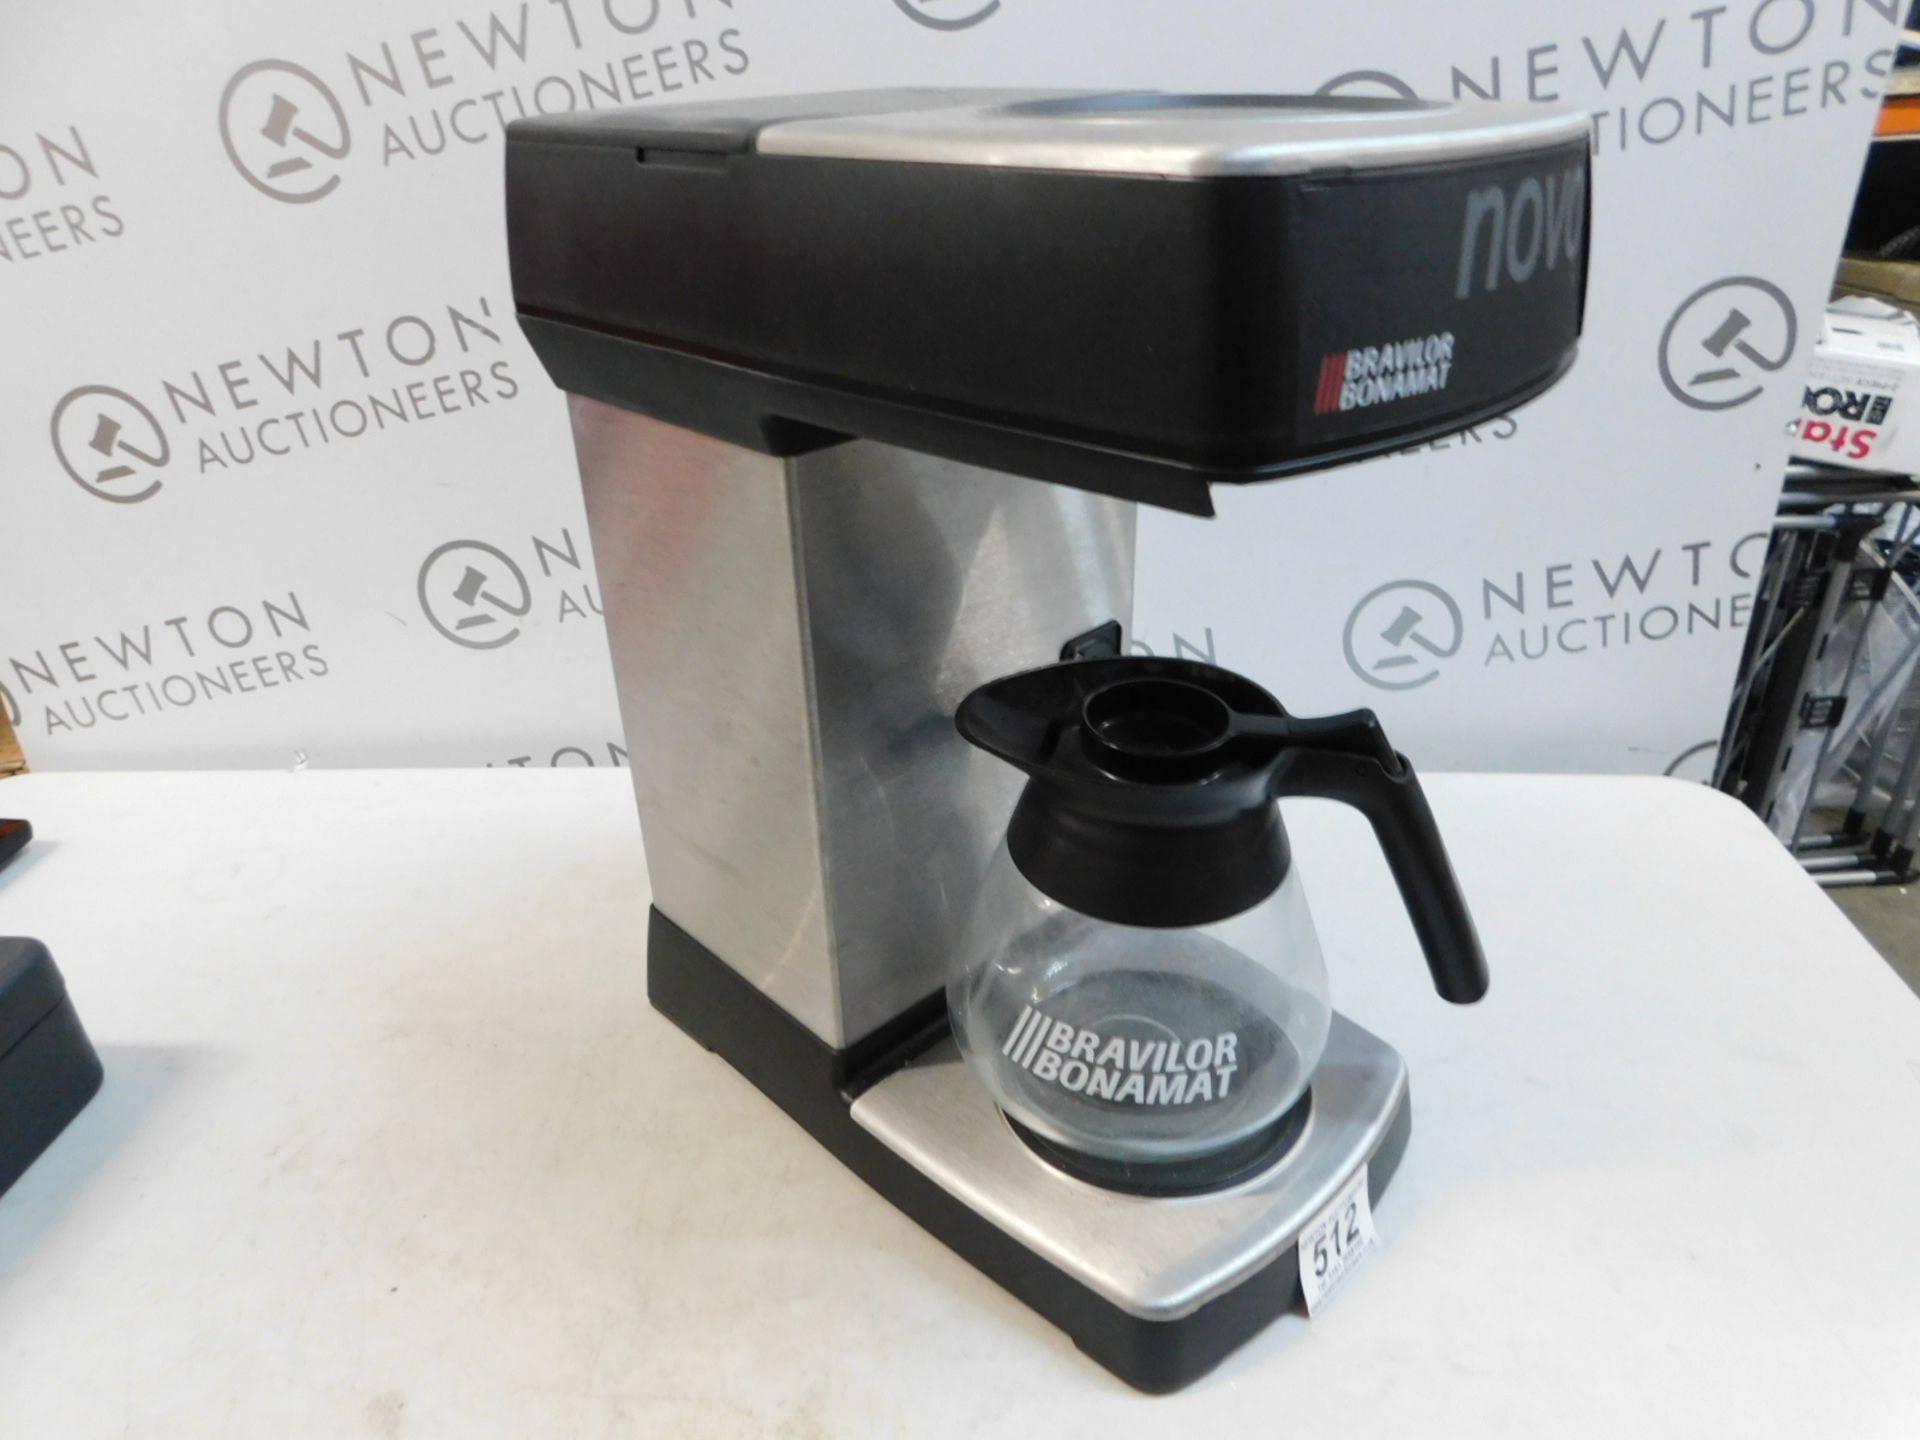 1 BRAVILOR BONAMAT NOVO COFFE MACHINE WITH JUG RRP Â£249.99